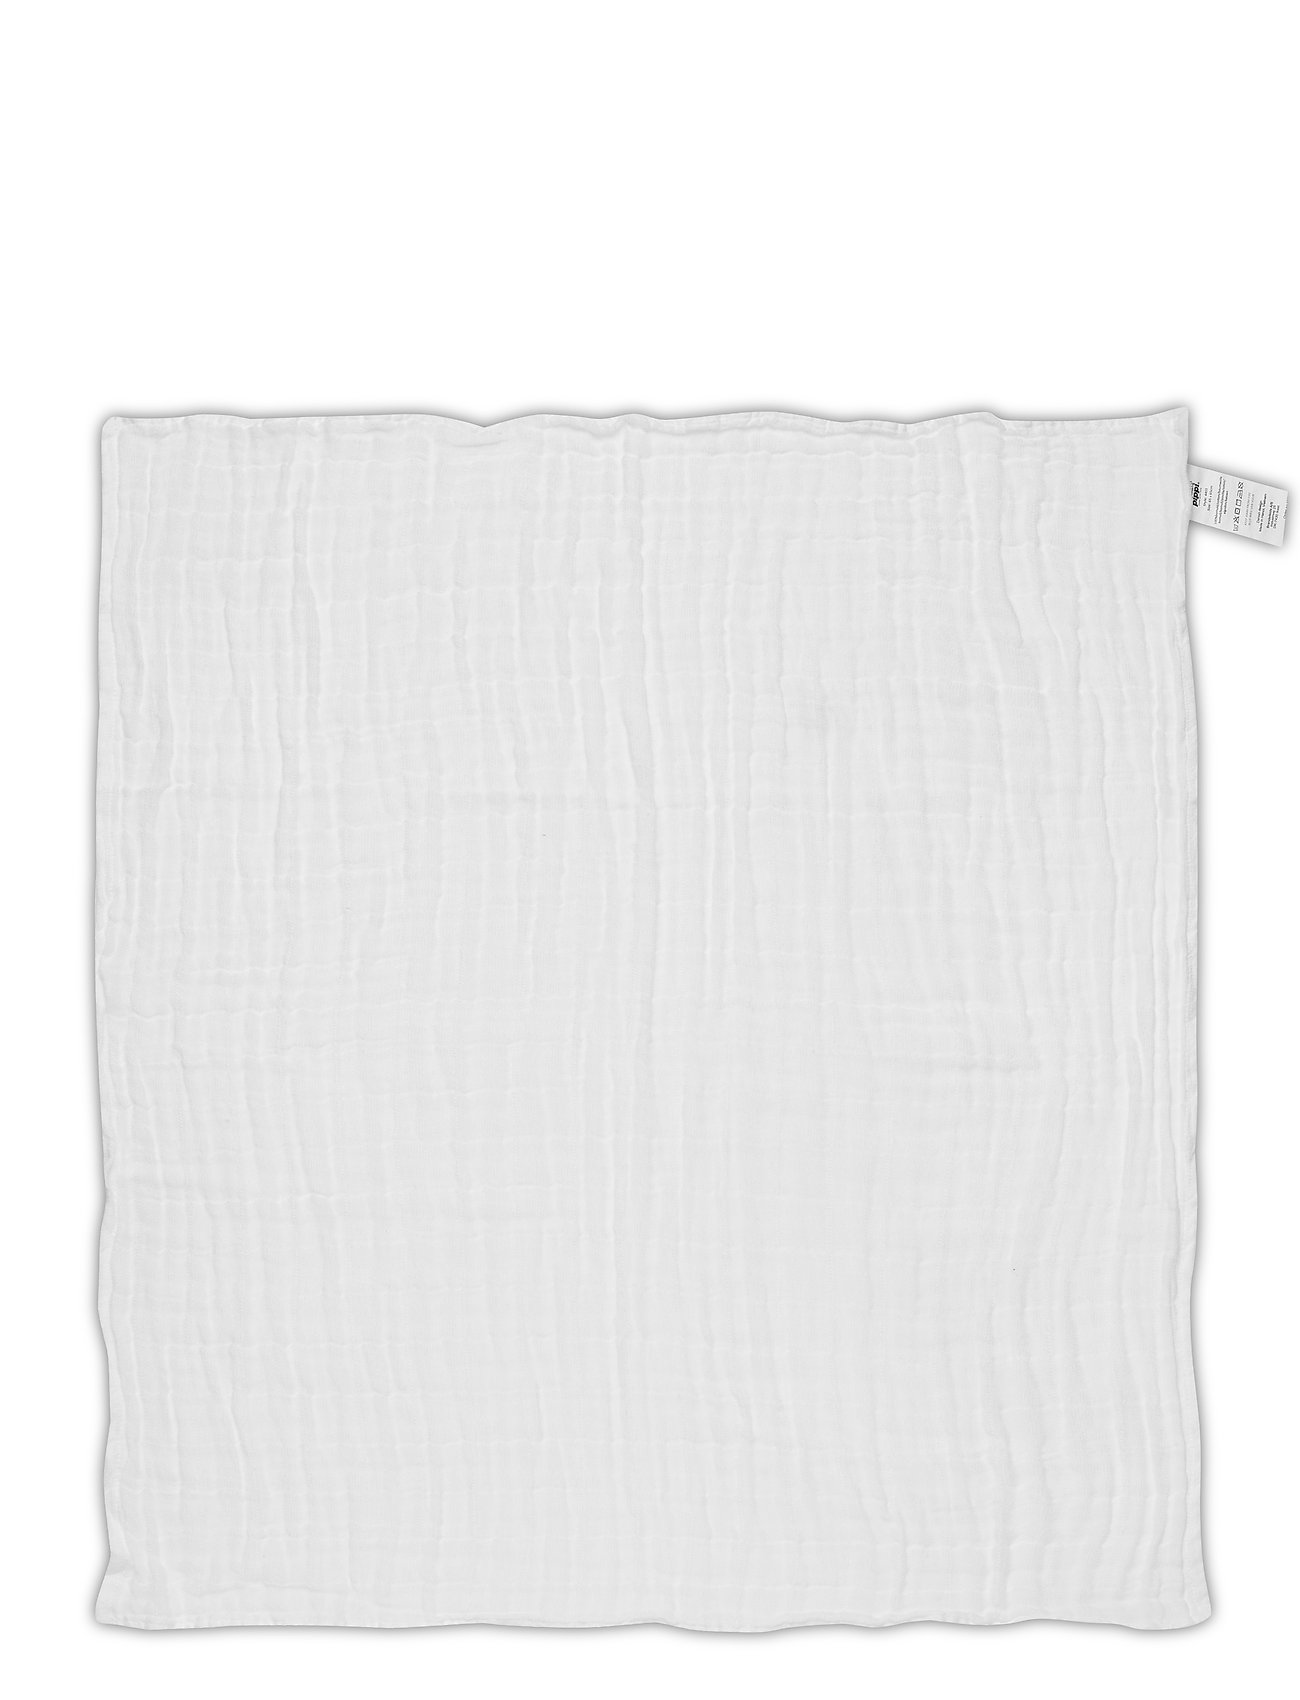 Pippi - Organic Cloth Muslin -4 pack - white-101 - 1